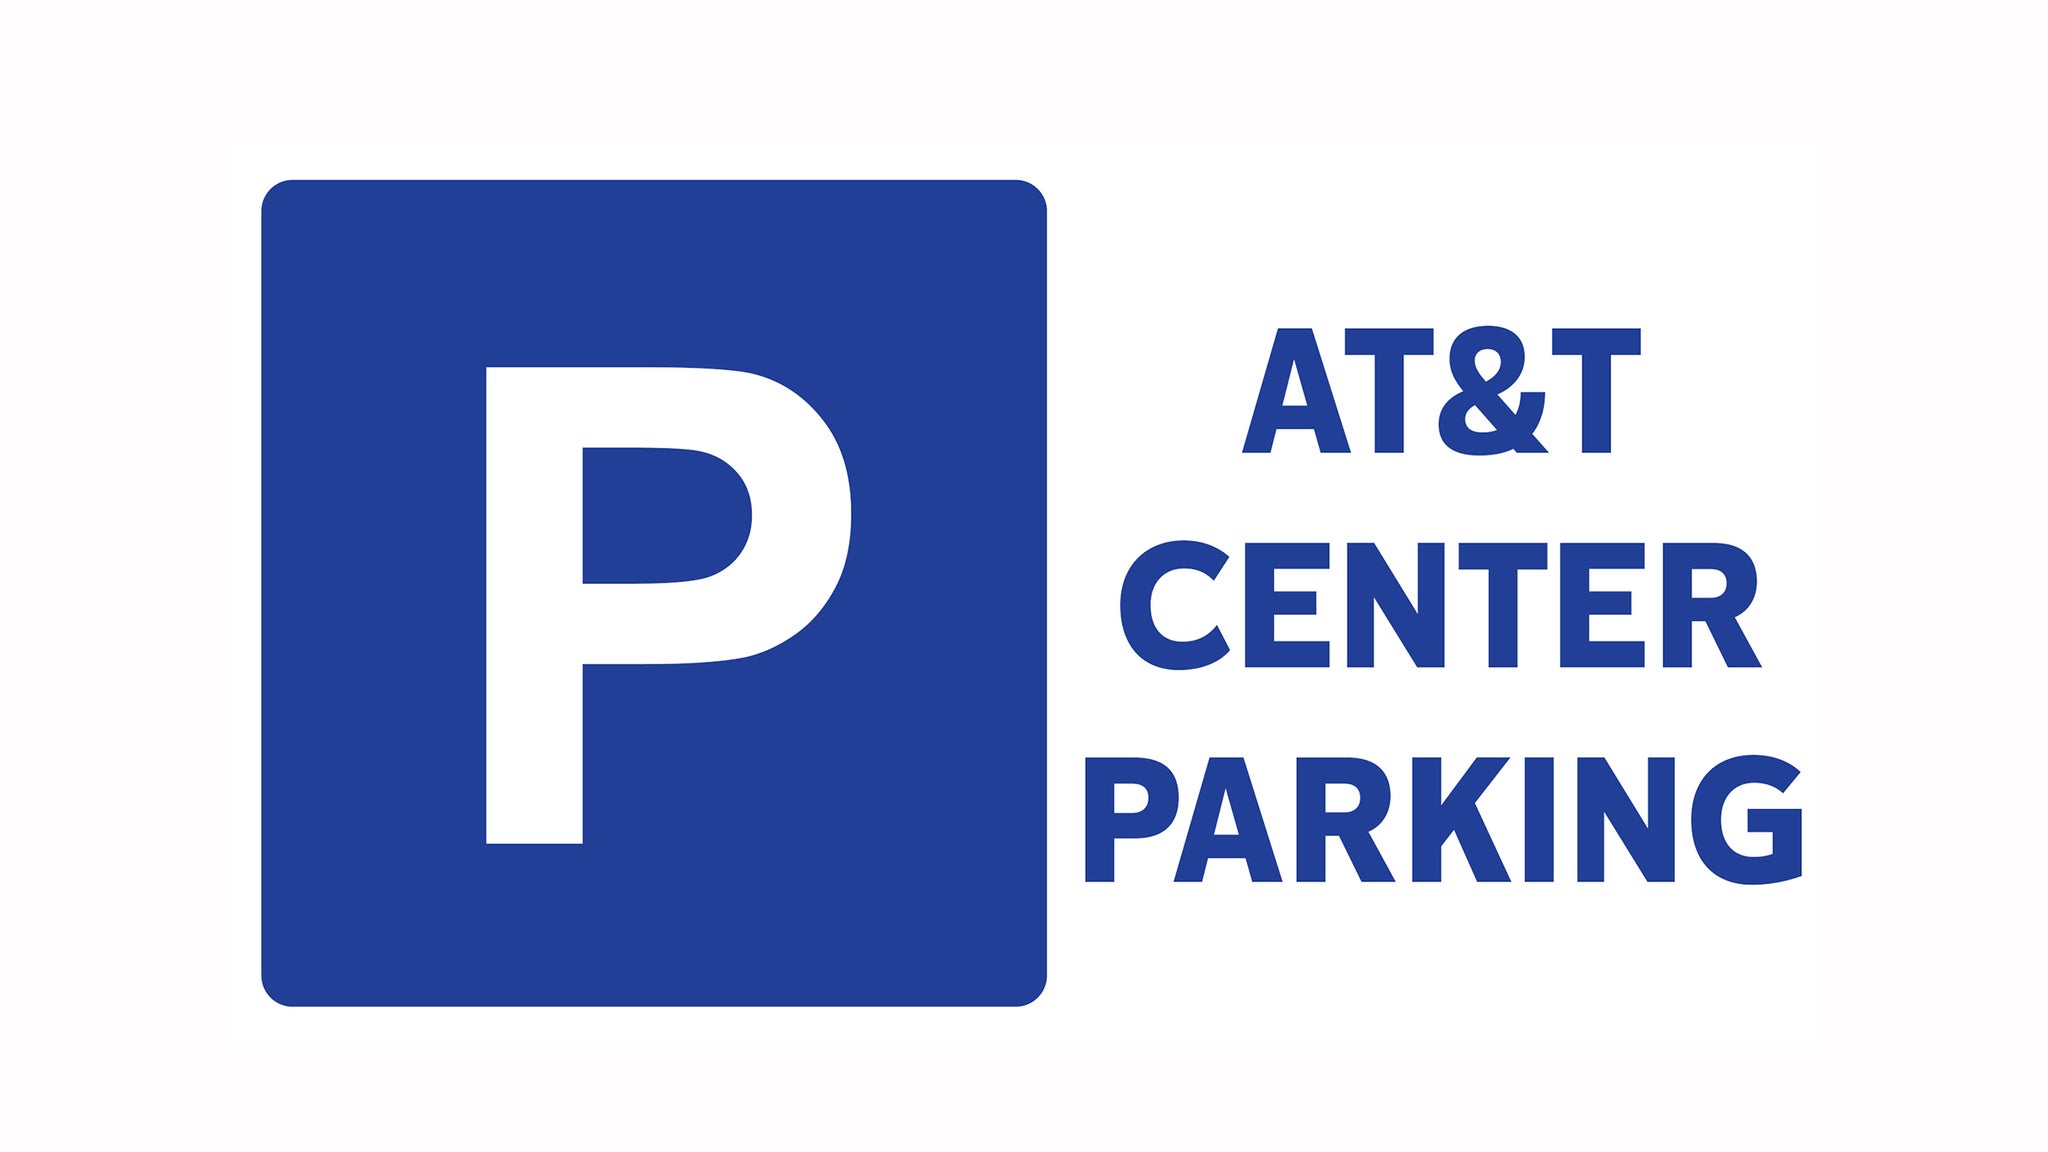 AT&T Center Parking: San Antonio Spurs in San Antonio promo photo for Resale Onsale presale offer code